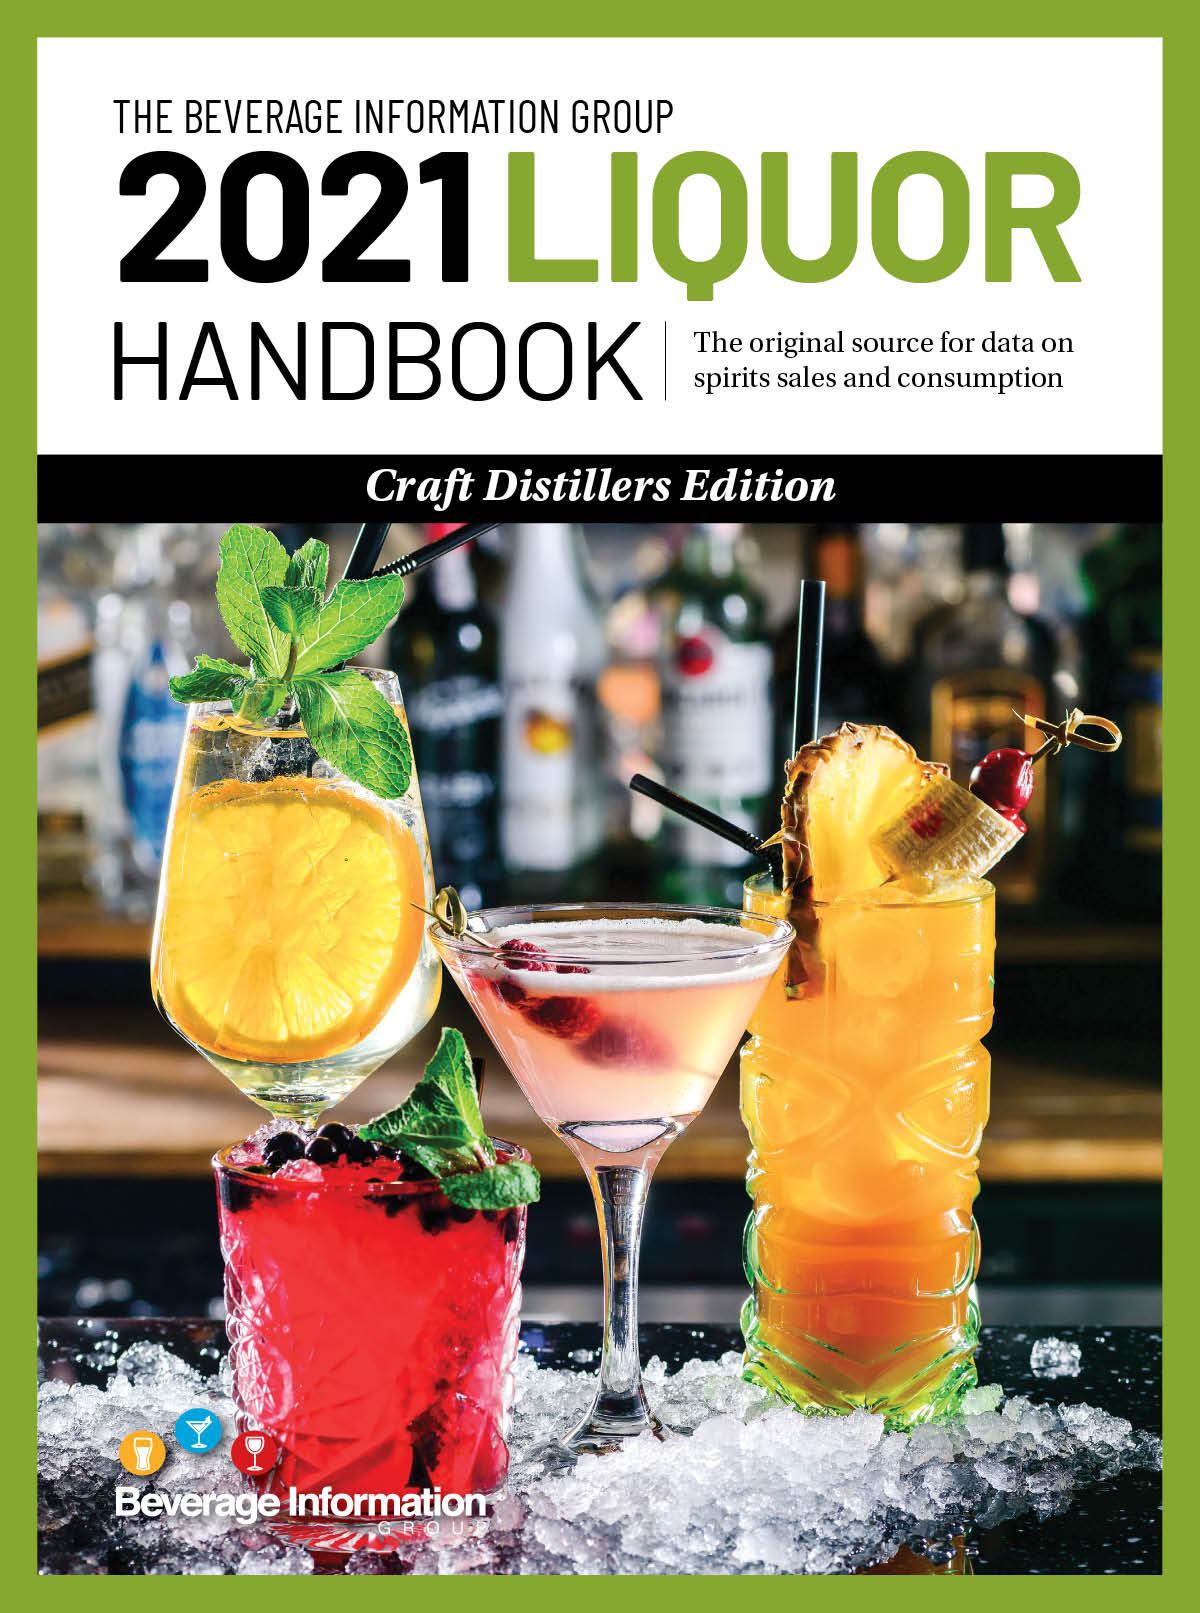 DISCUS Craft Distillers Edition - 2021 Liquor Handbook